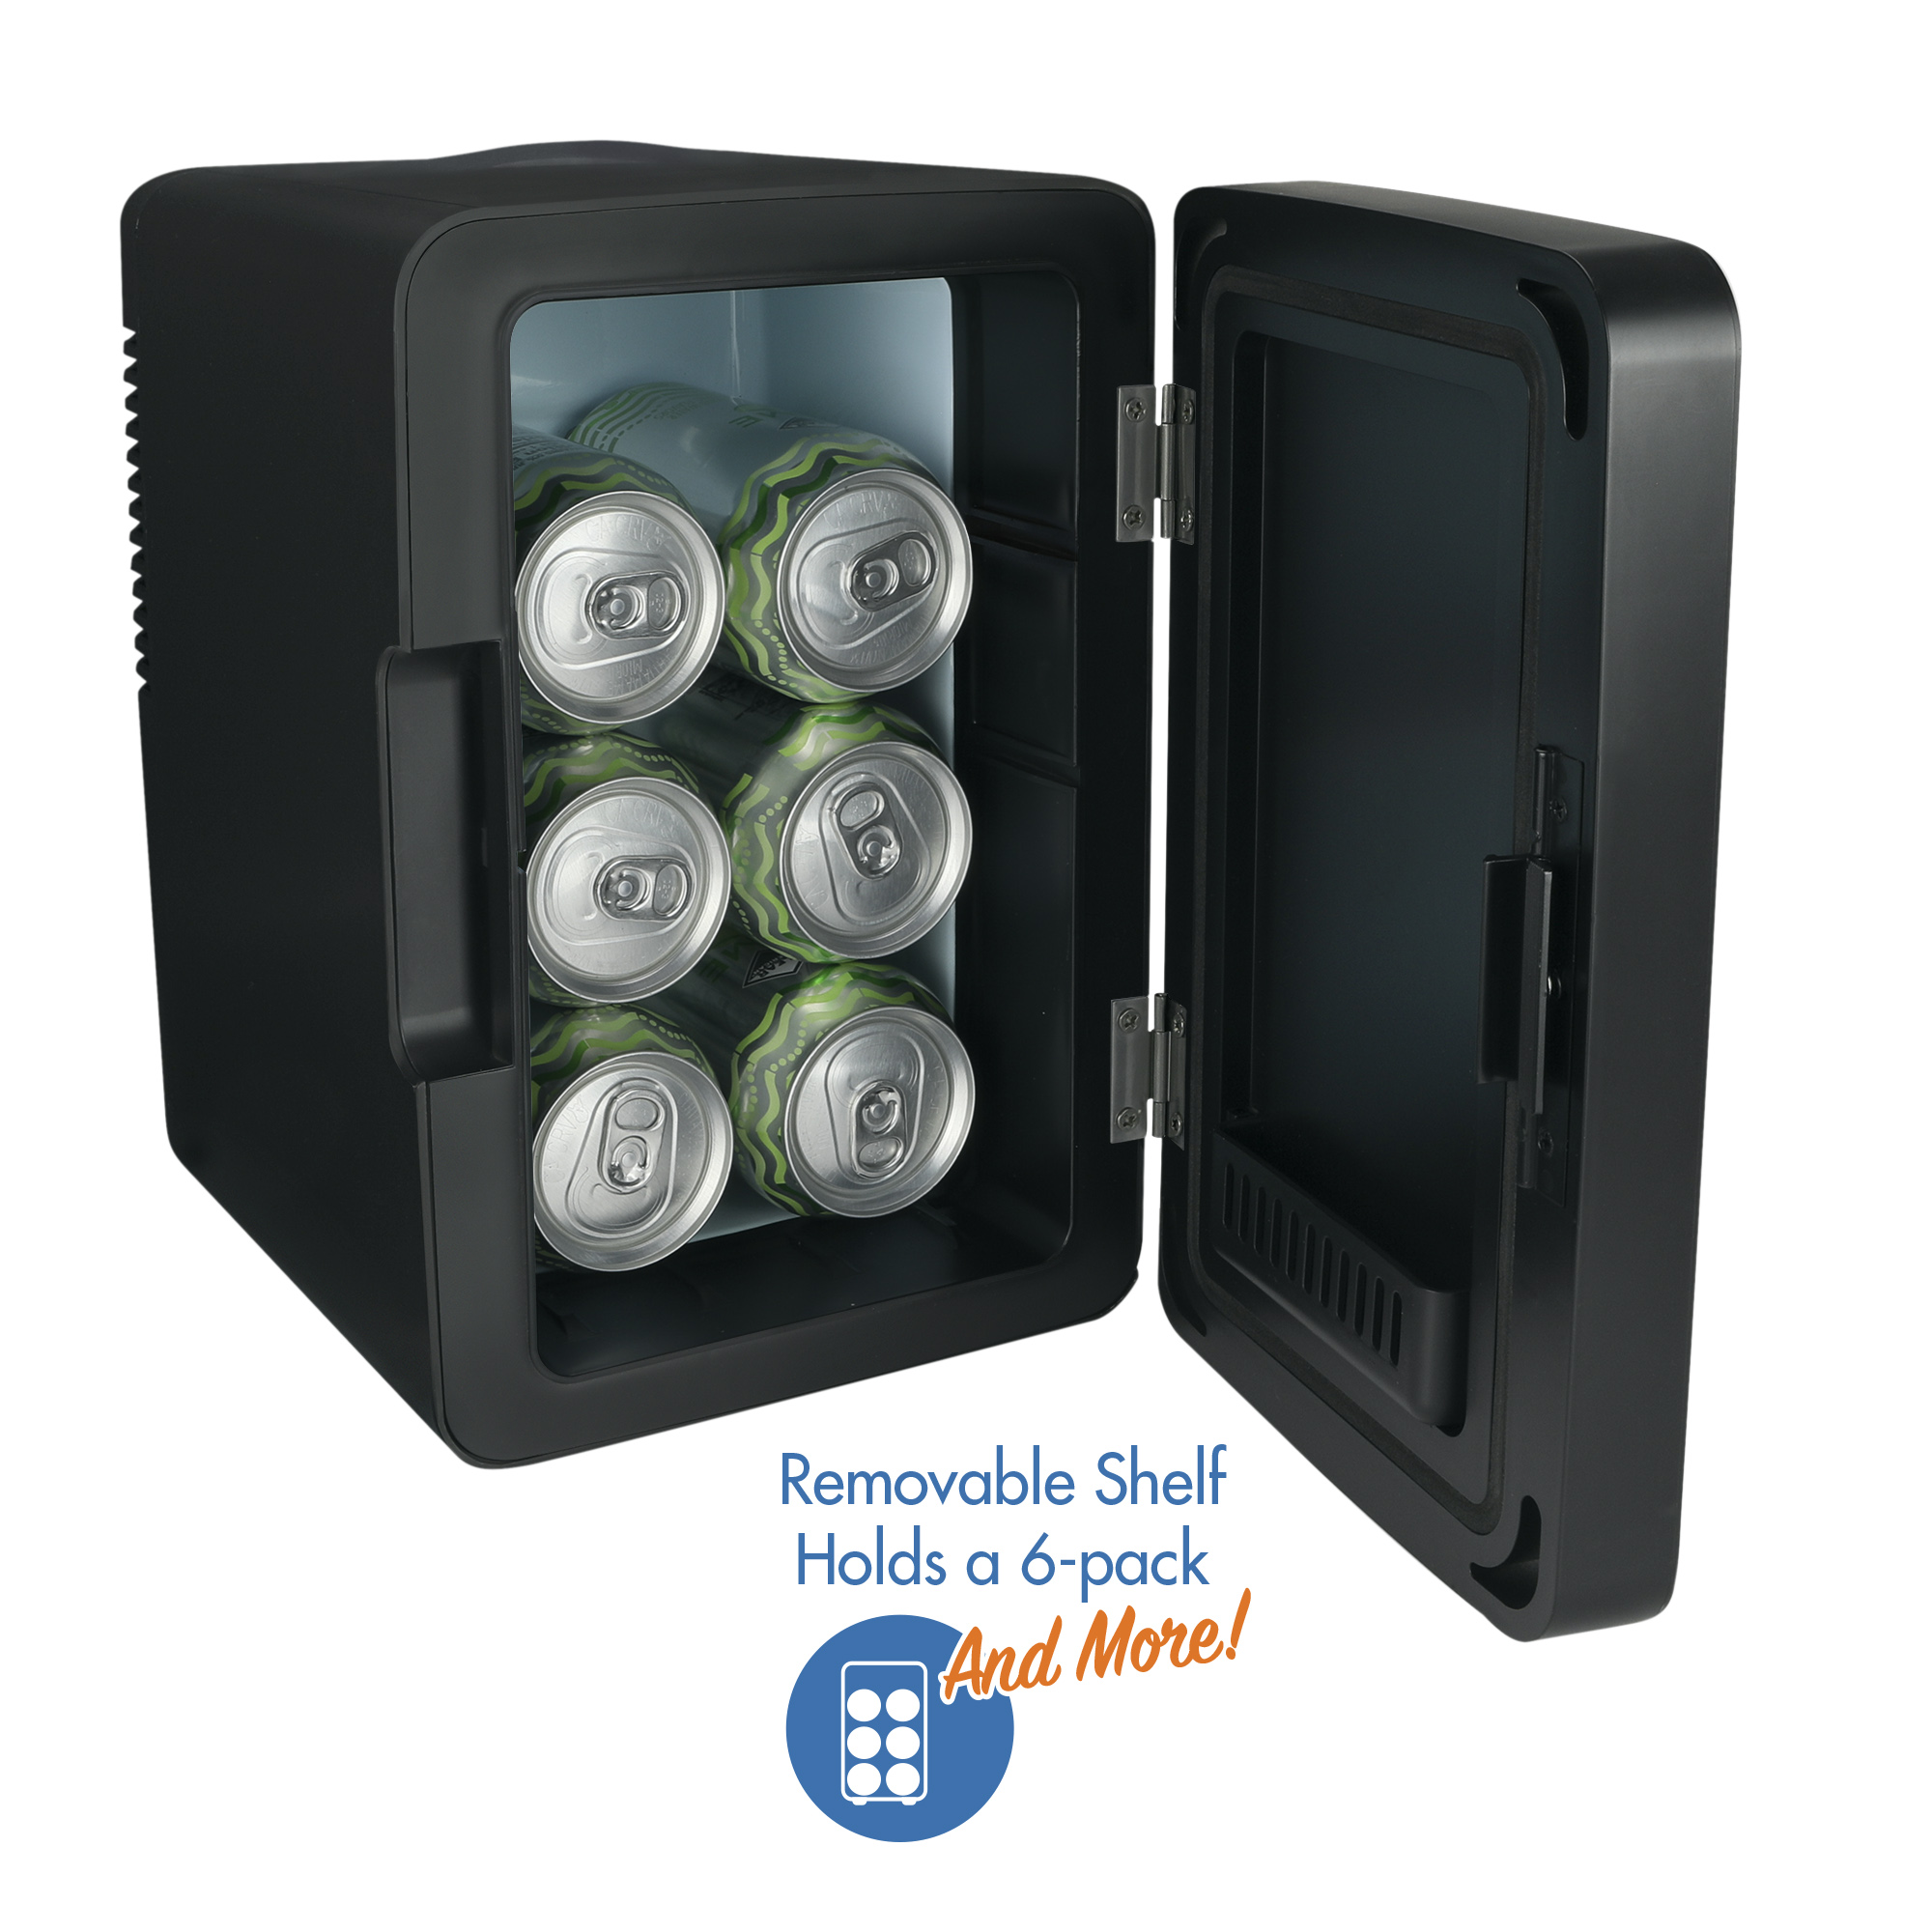 Personal Chiller LED Lighted Mini Fridge with Glass Door, New, Black, Standard Hinge Door - image 7 of 14